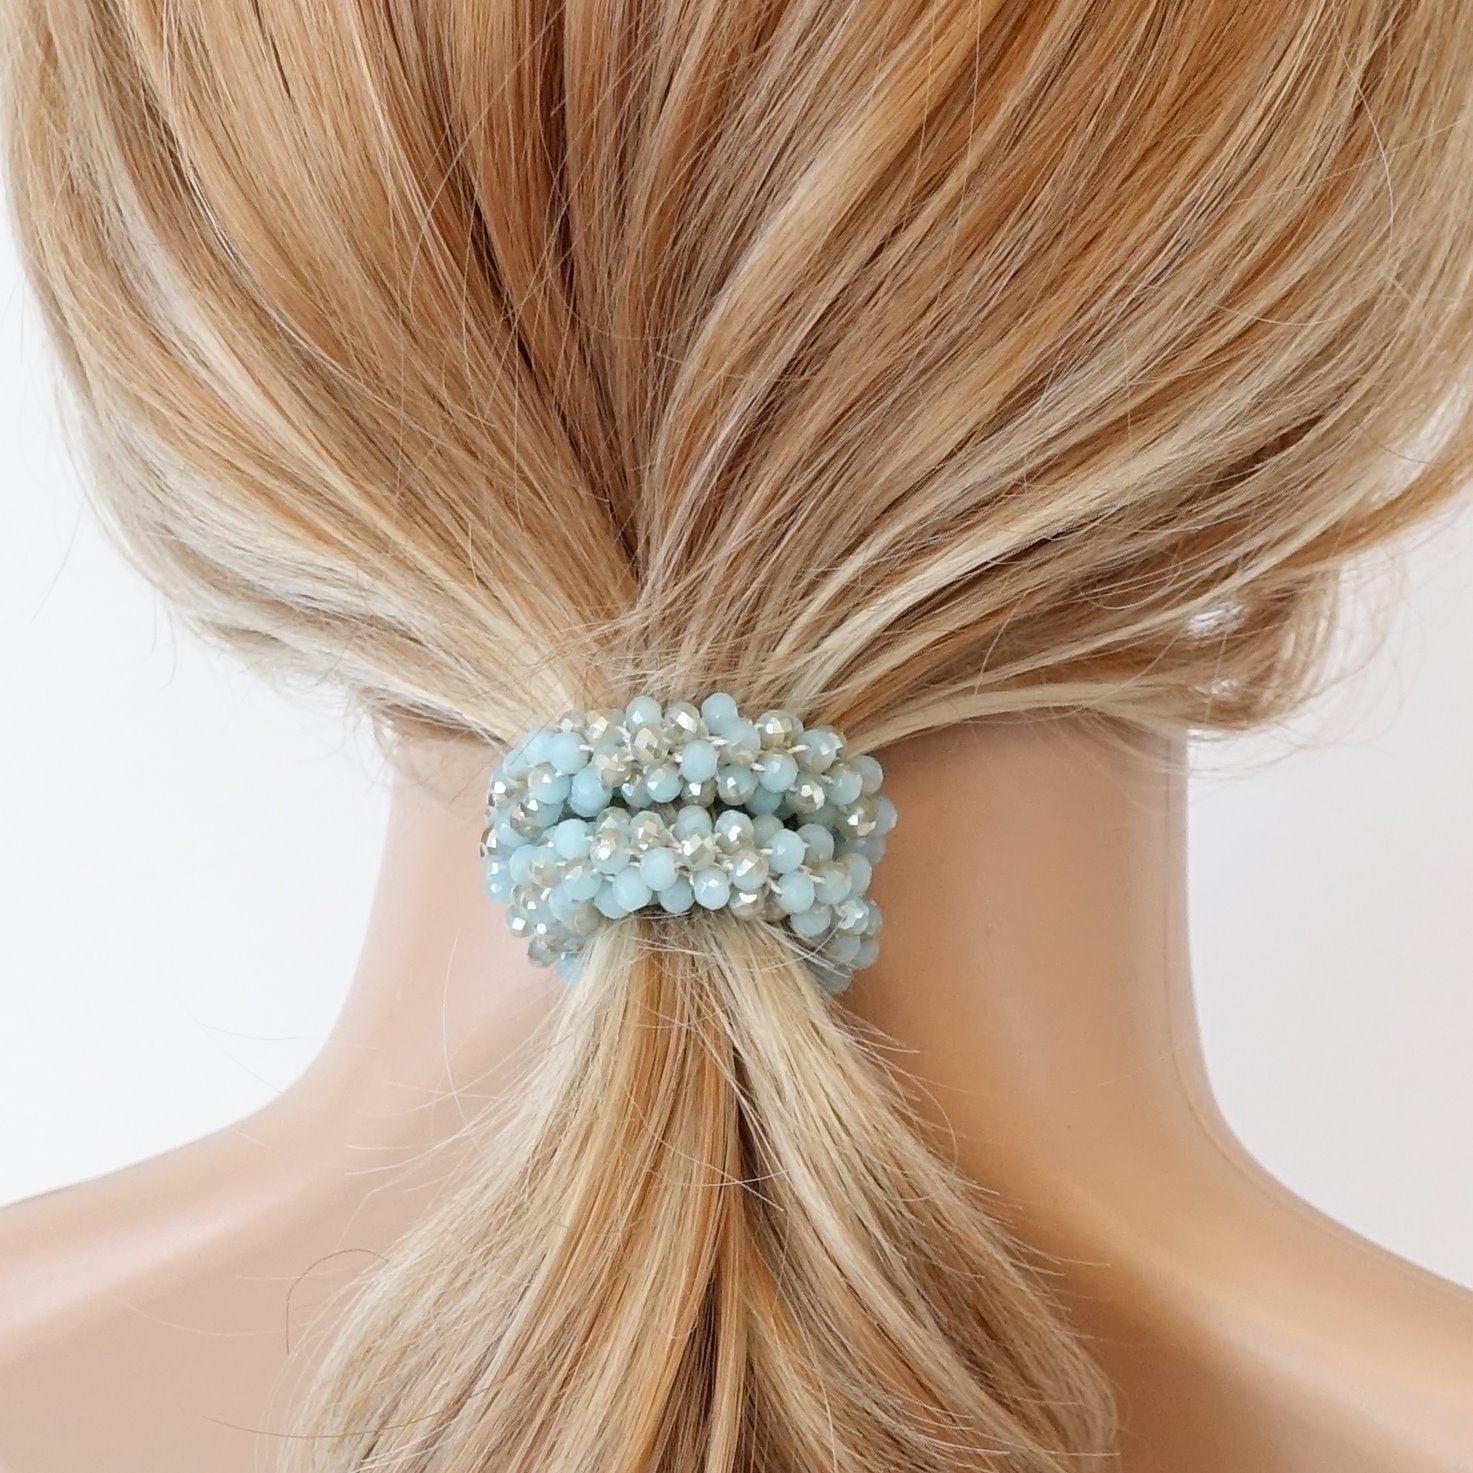 veryshine.com Ponytail holders Jade crystal glass beaded 2 tone hair elastic pony tail holder dazzling hair ties